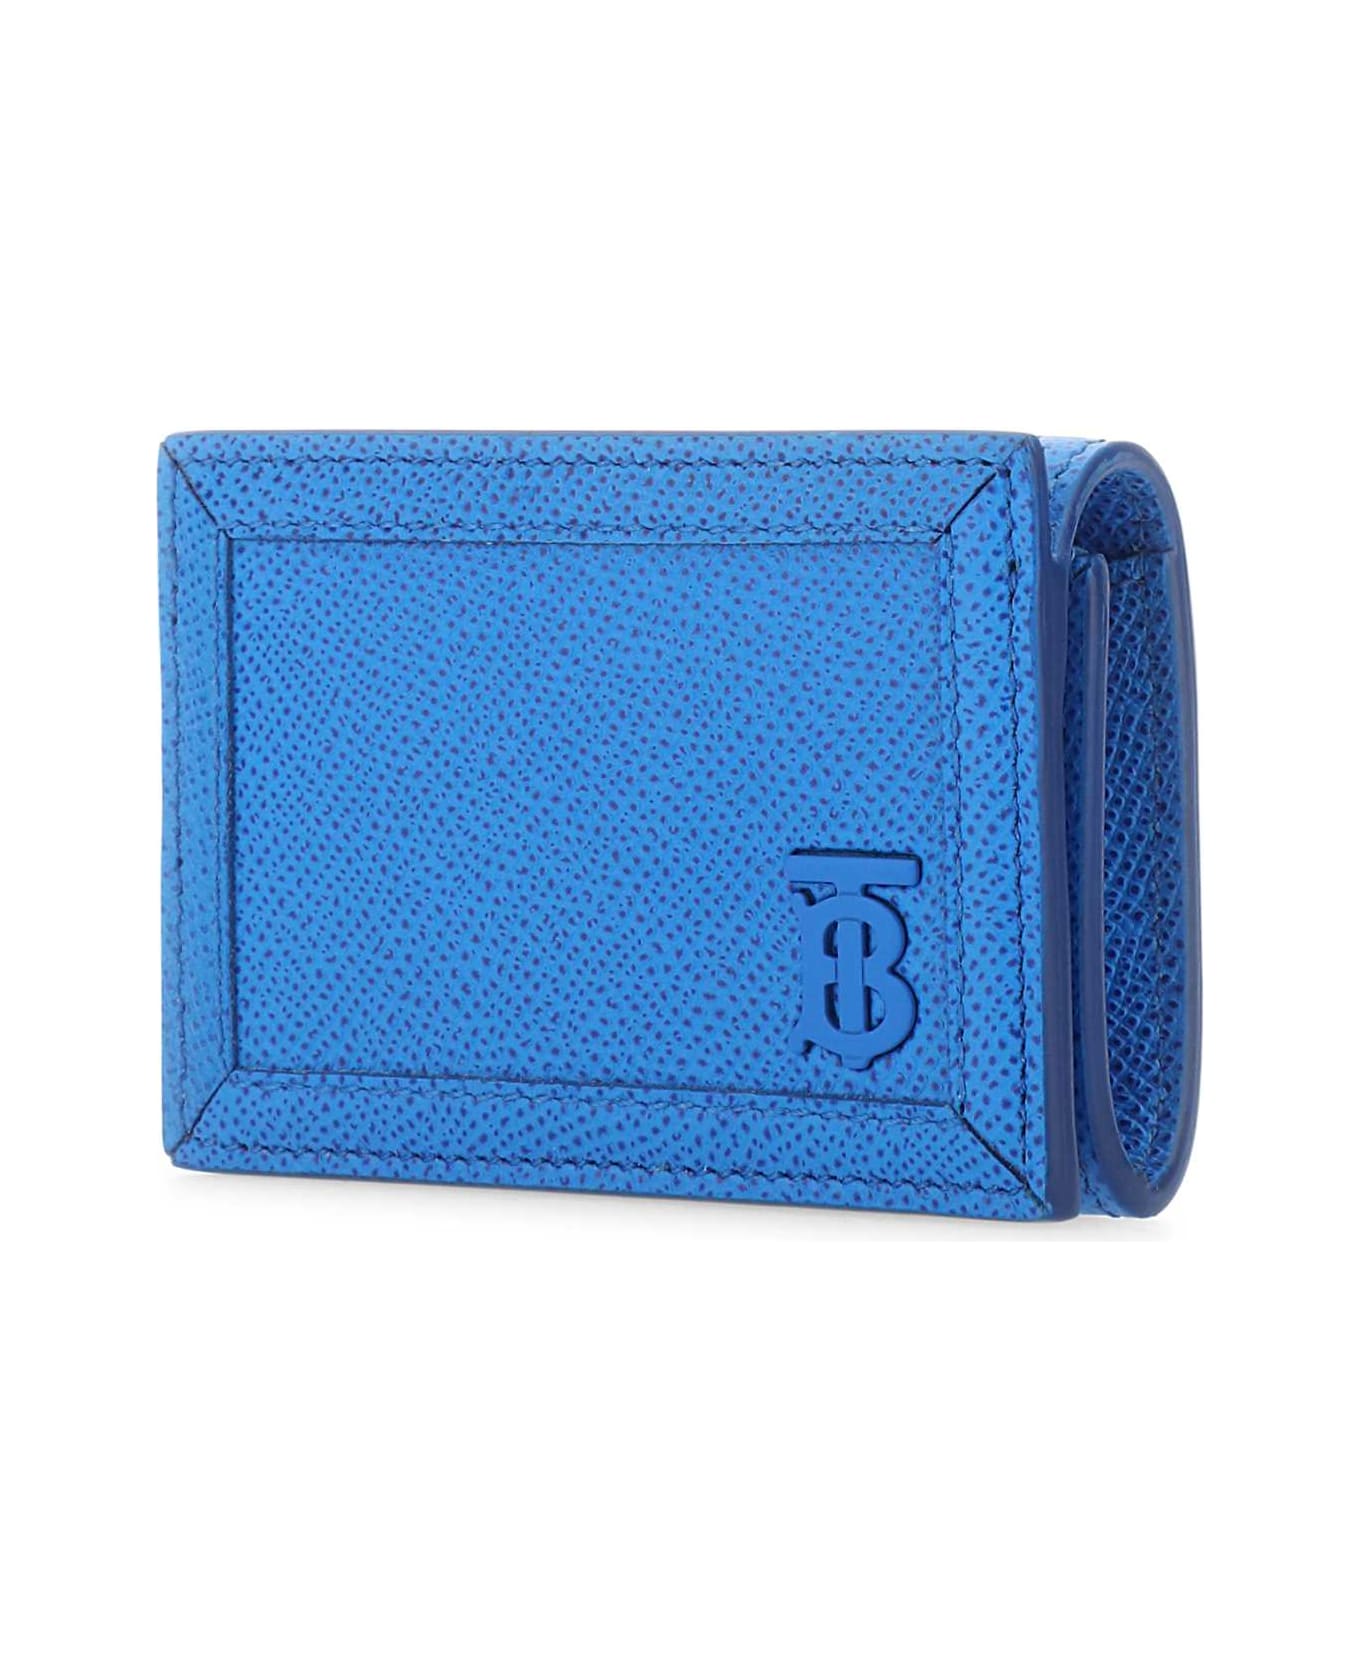 Burberry Turquoise Leather Card Holder - VIVIDBLUE 財布